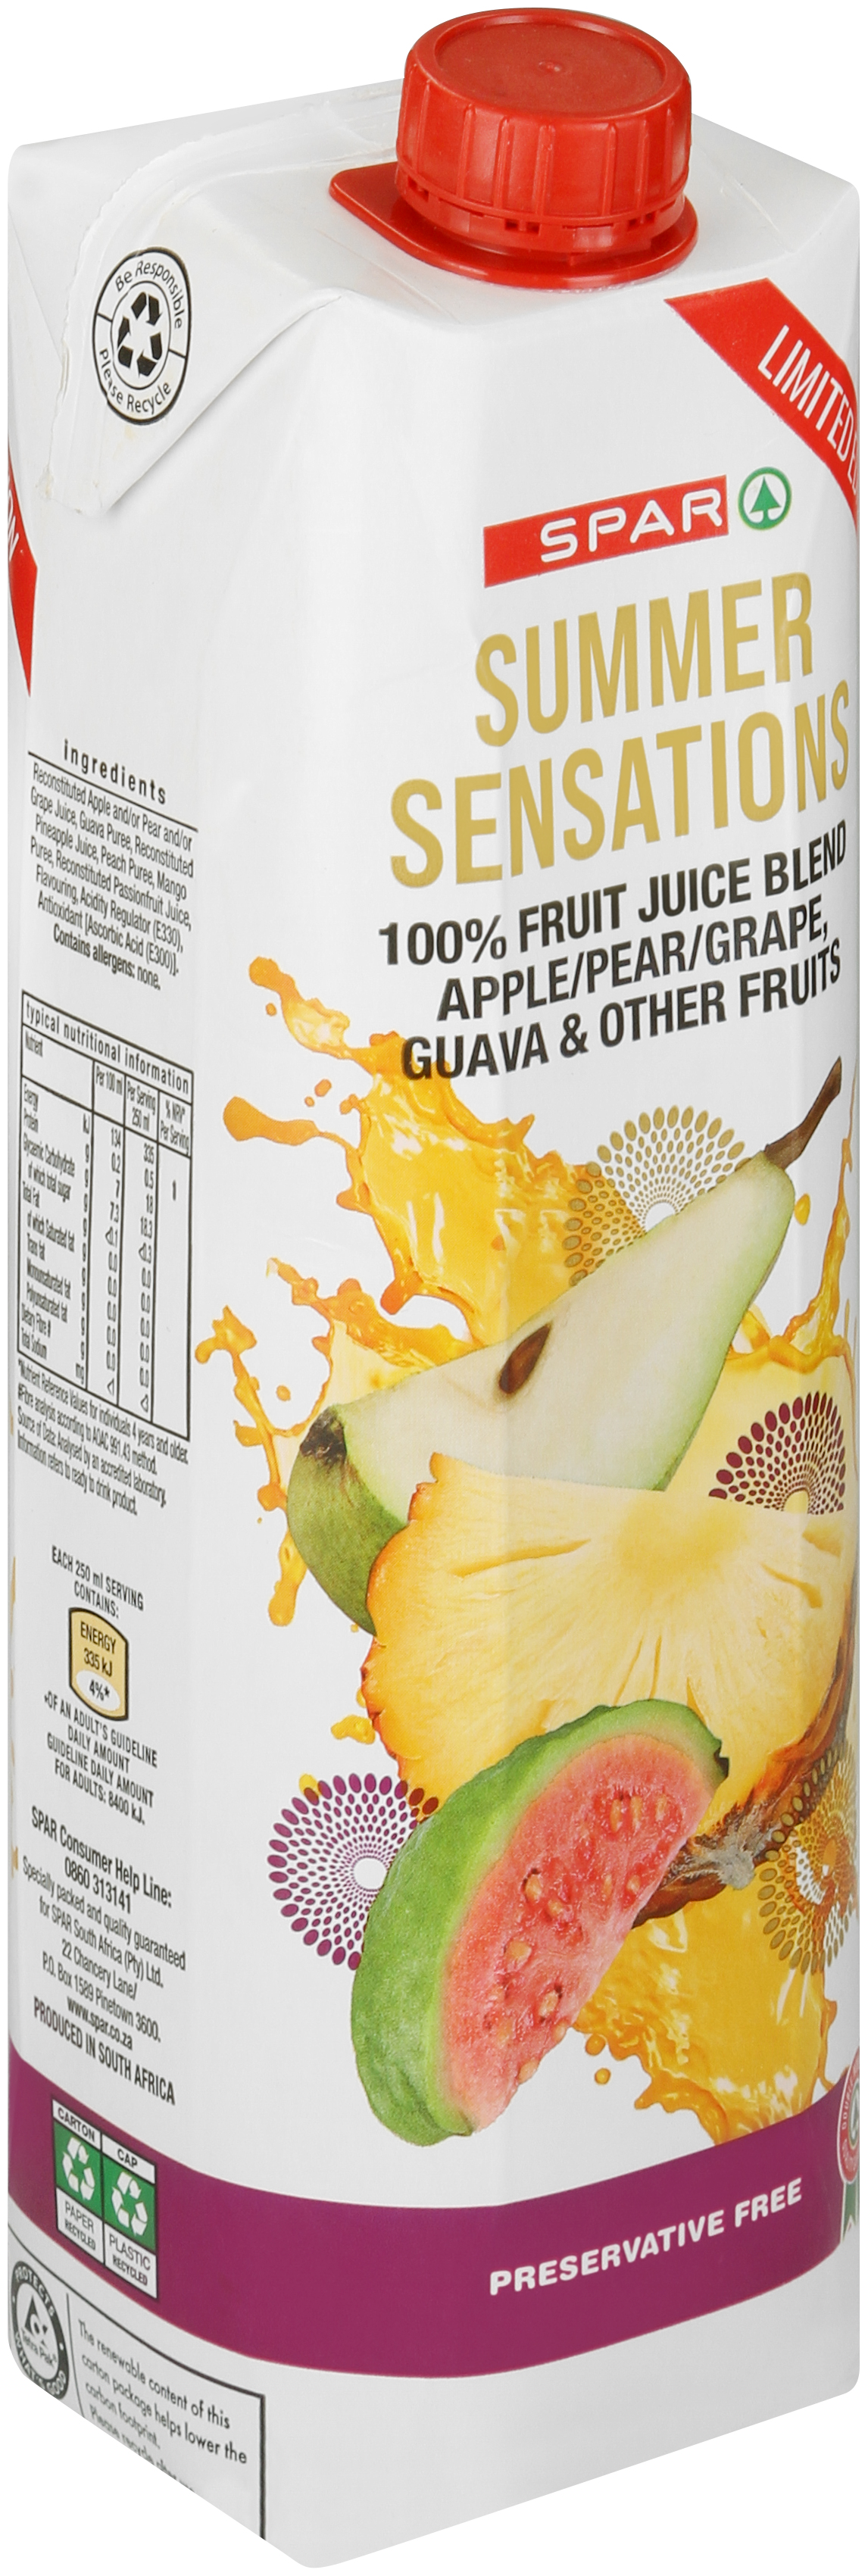 100% fruit juice blend - summer sensations